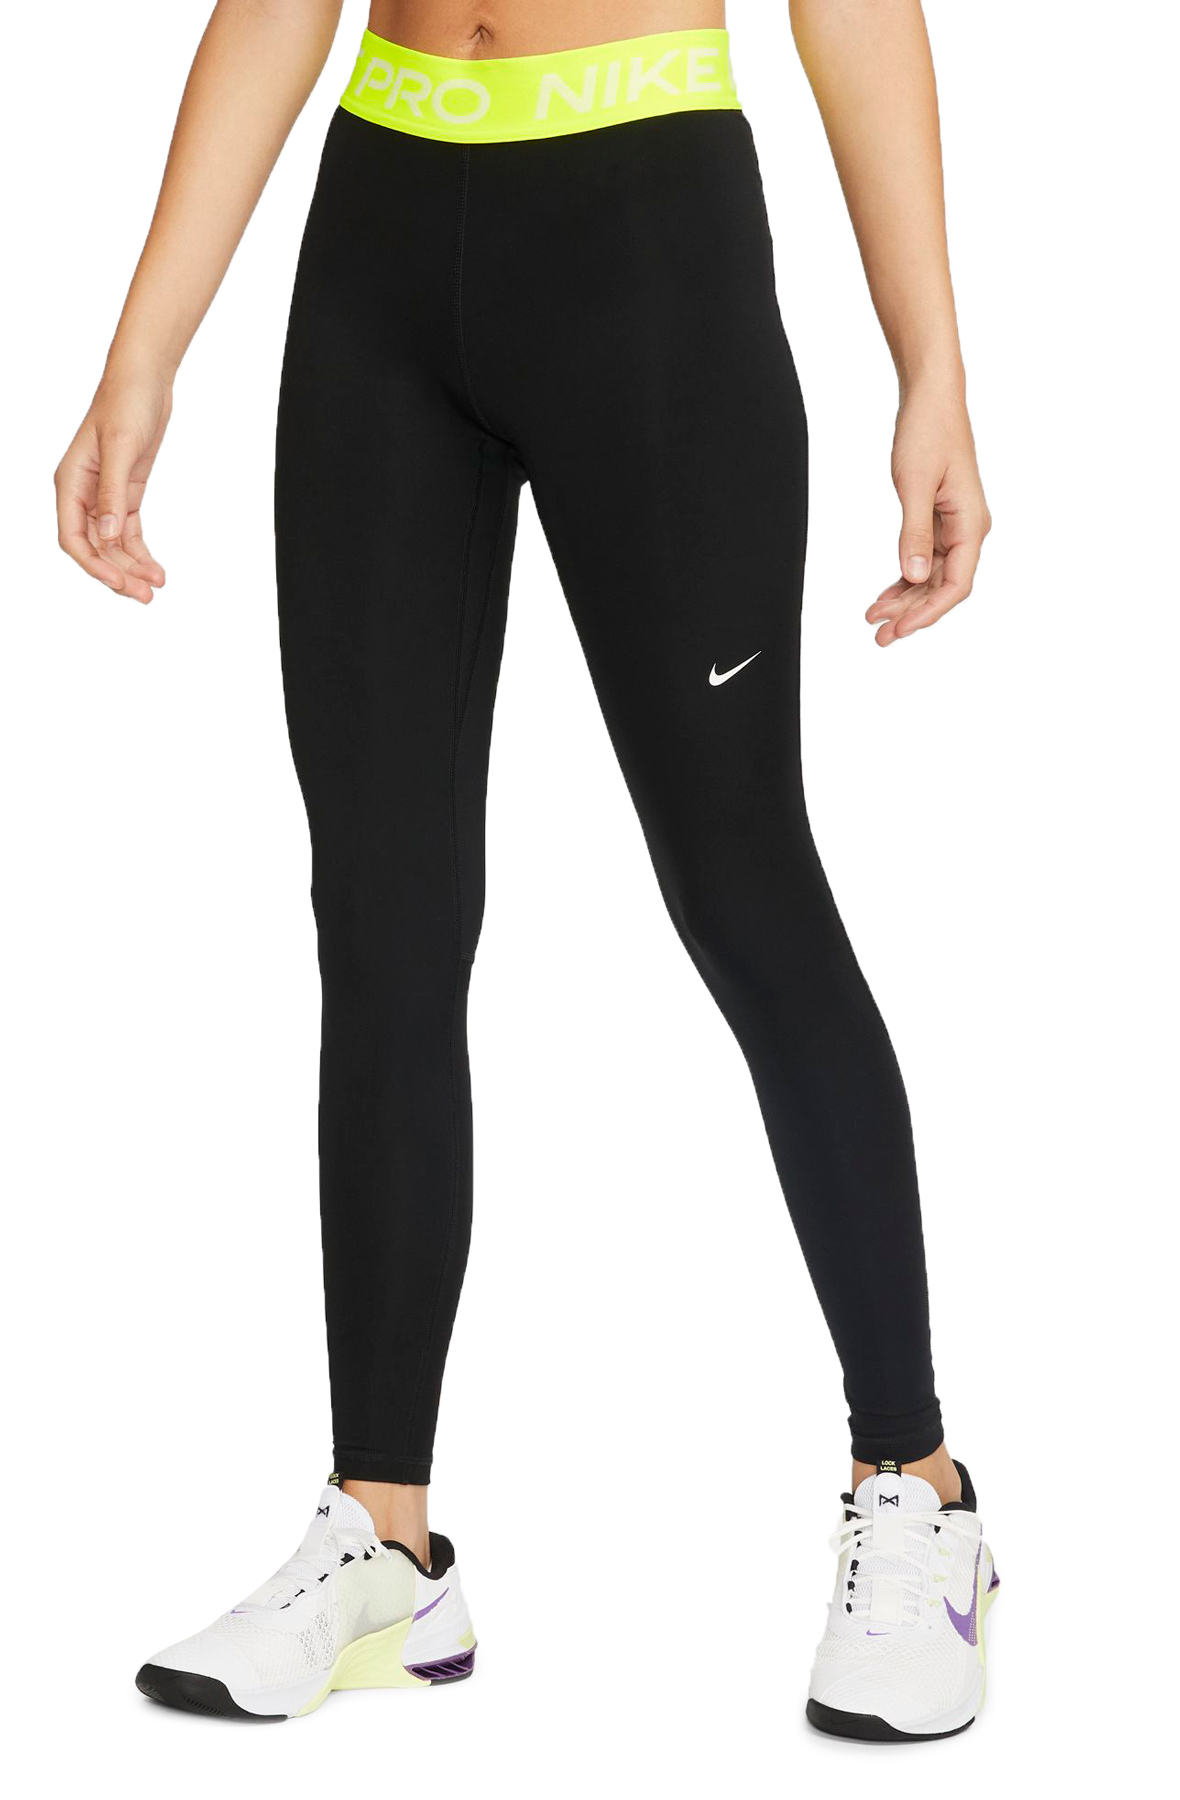 Jual NIKE Women Training Pro 365 Tight Celana Fitness Wanita [CZ9780-010] -  Hitam S di Seller Nike Sports Official Store - Gudang Blibli